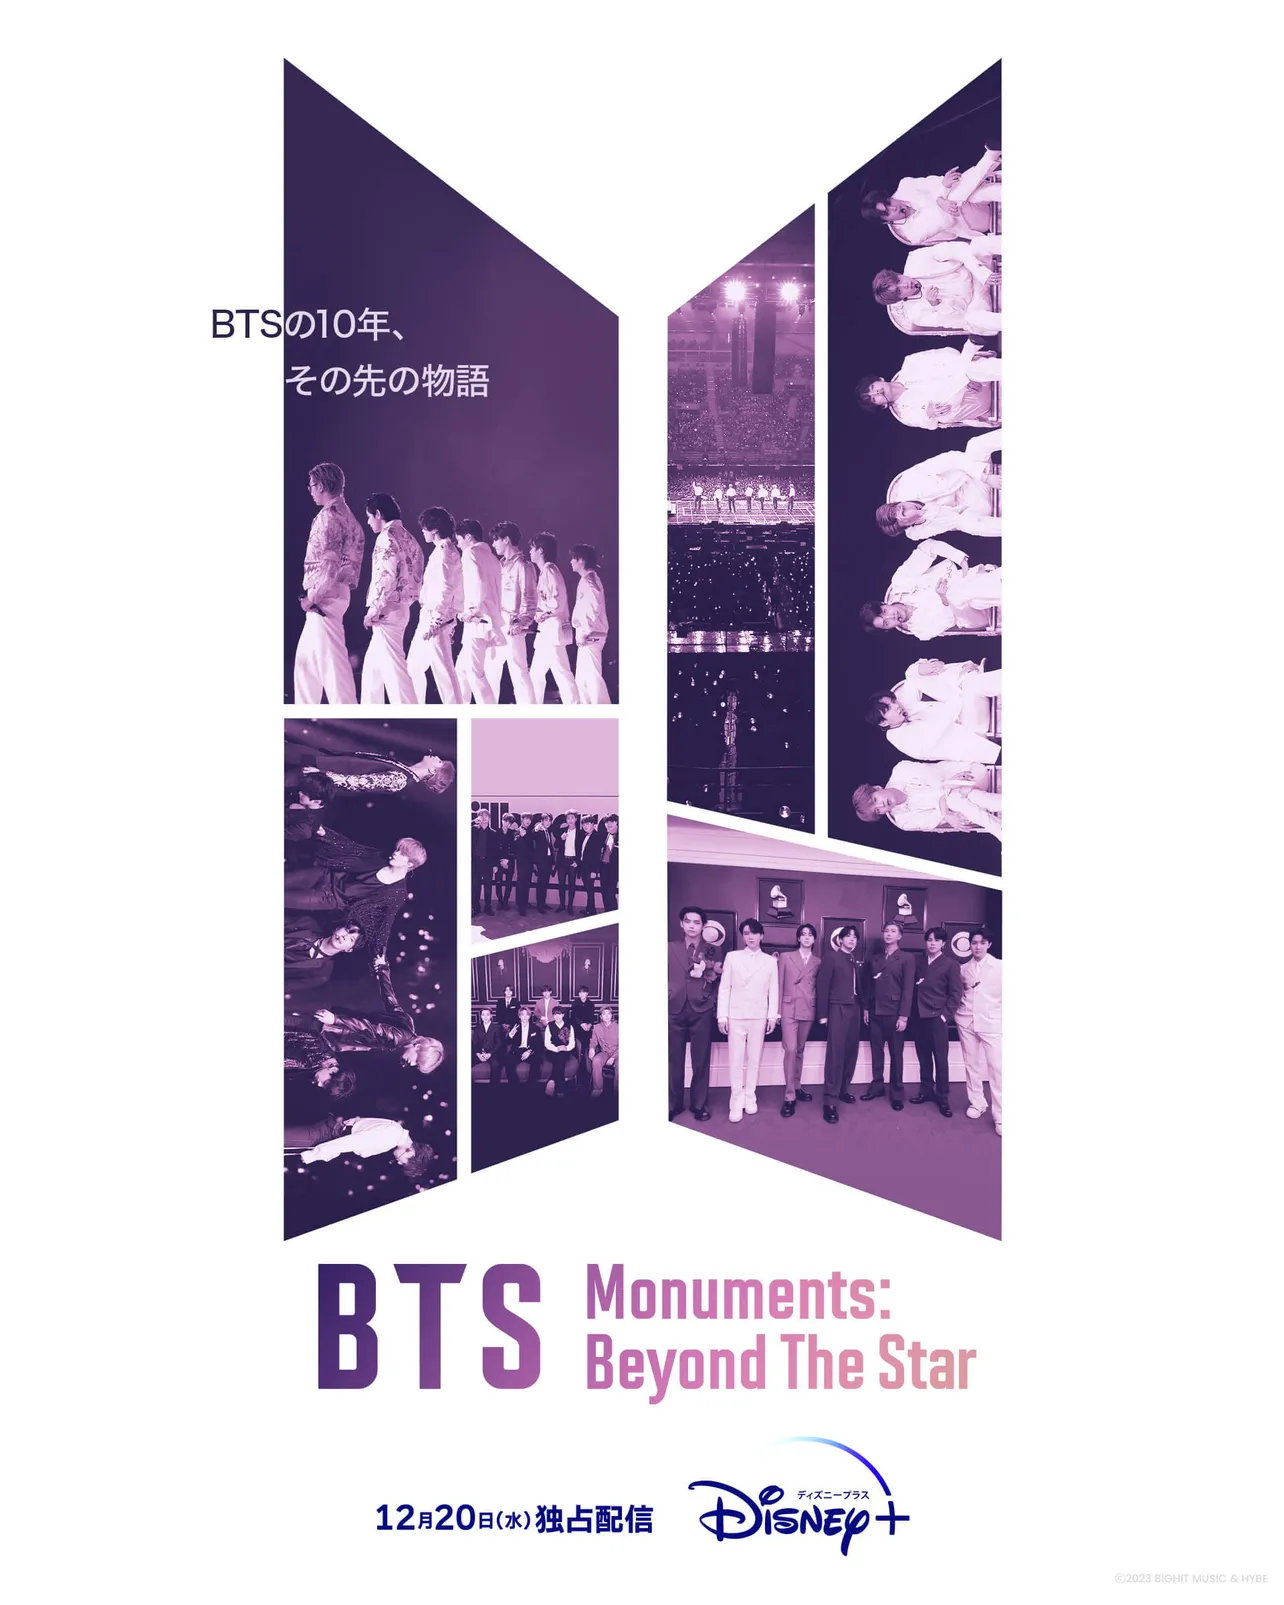 「BTS Monuments: Beyond The Star」ティザーポスター